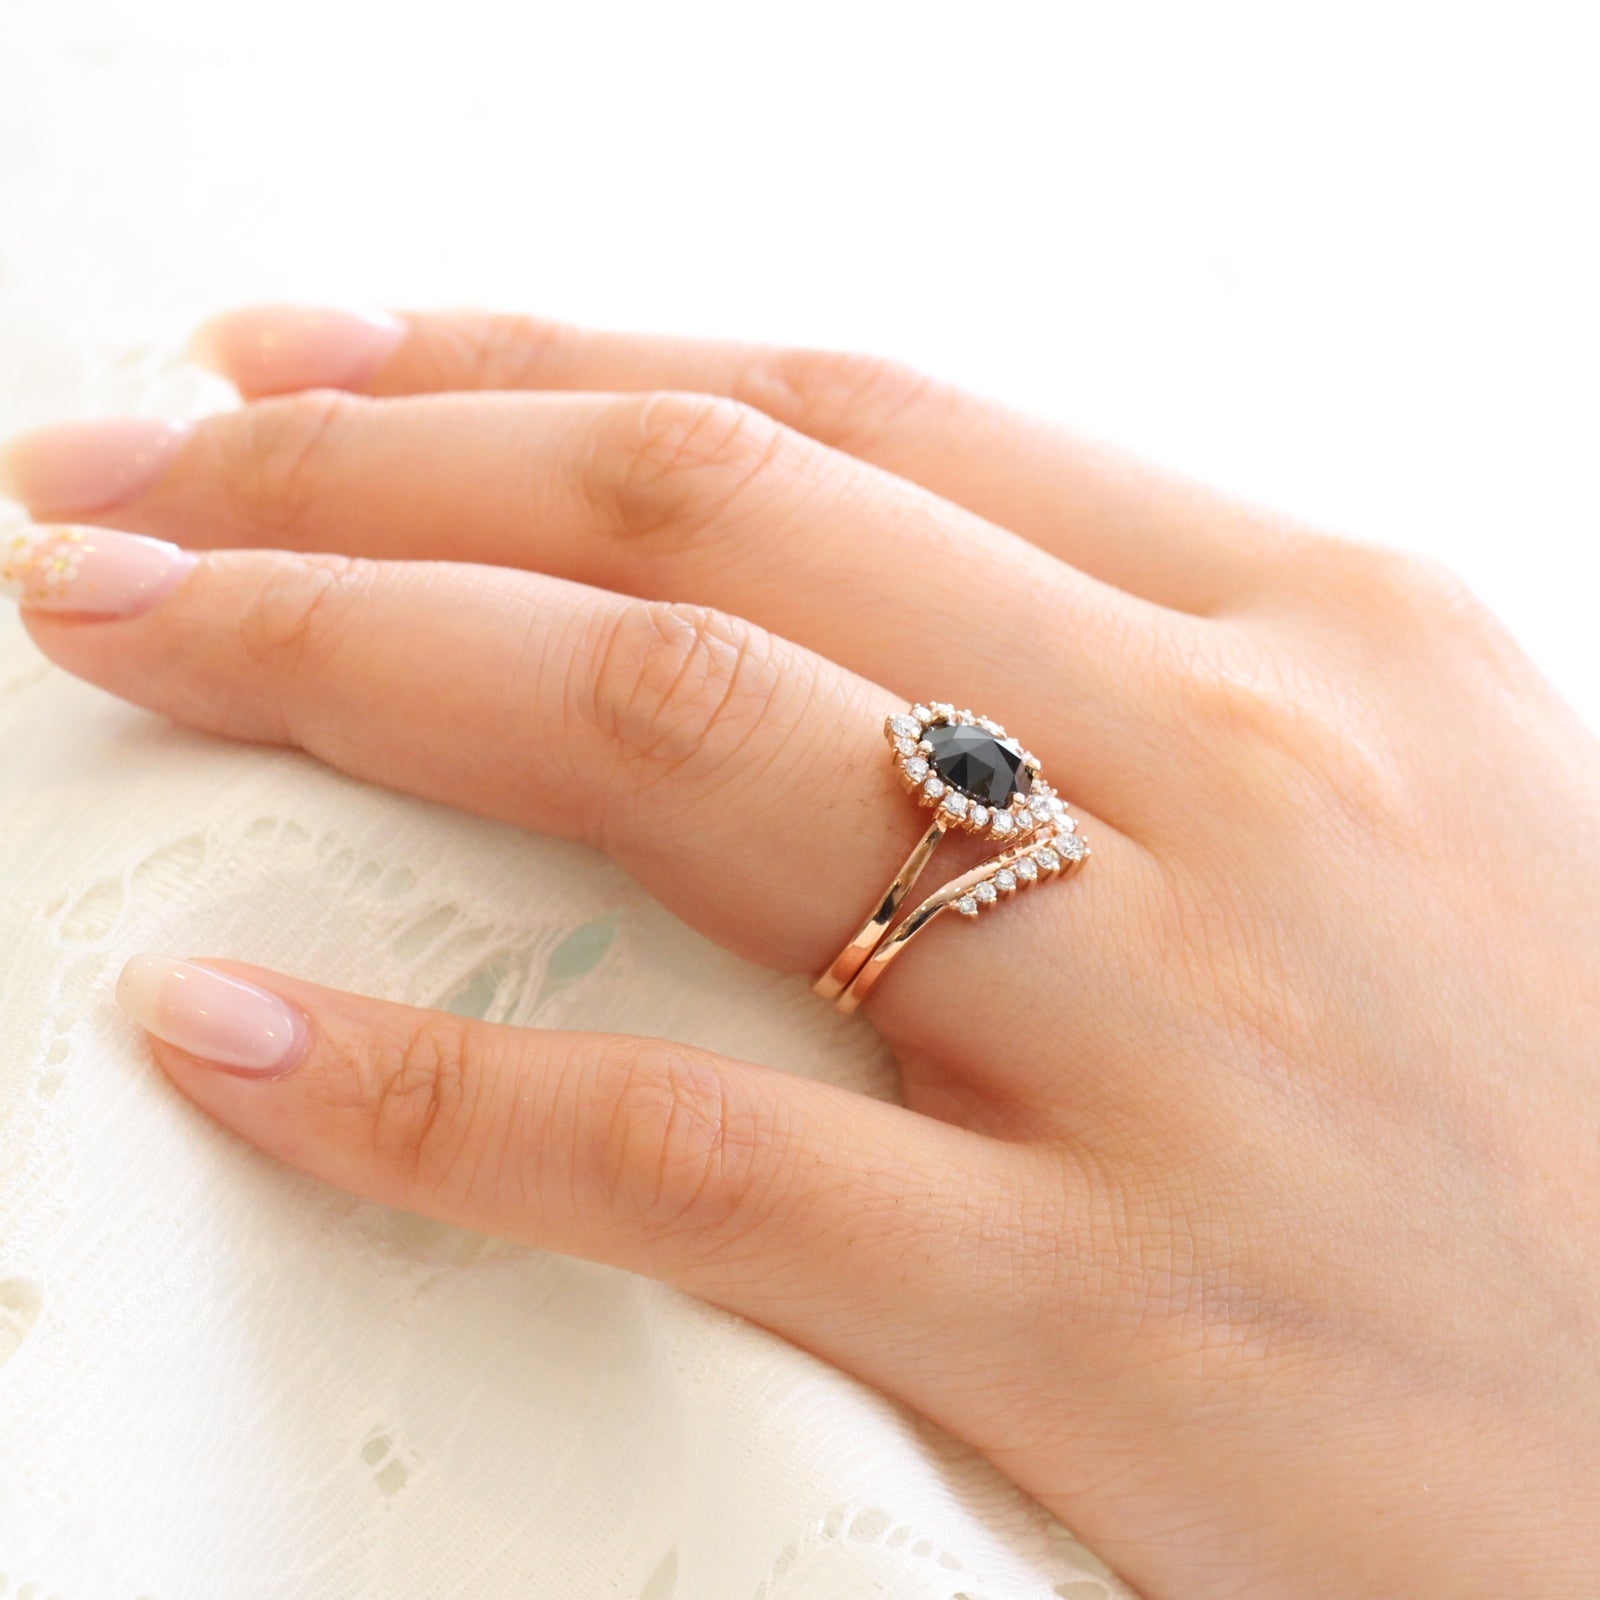 Oval rose cut black diamond ring rose gold and v shaped diamond wedding set by la more design